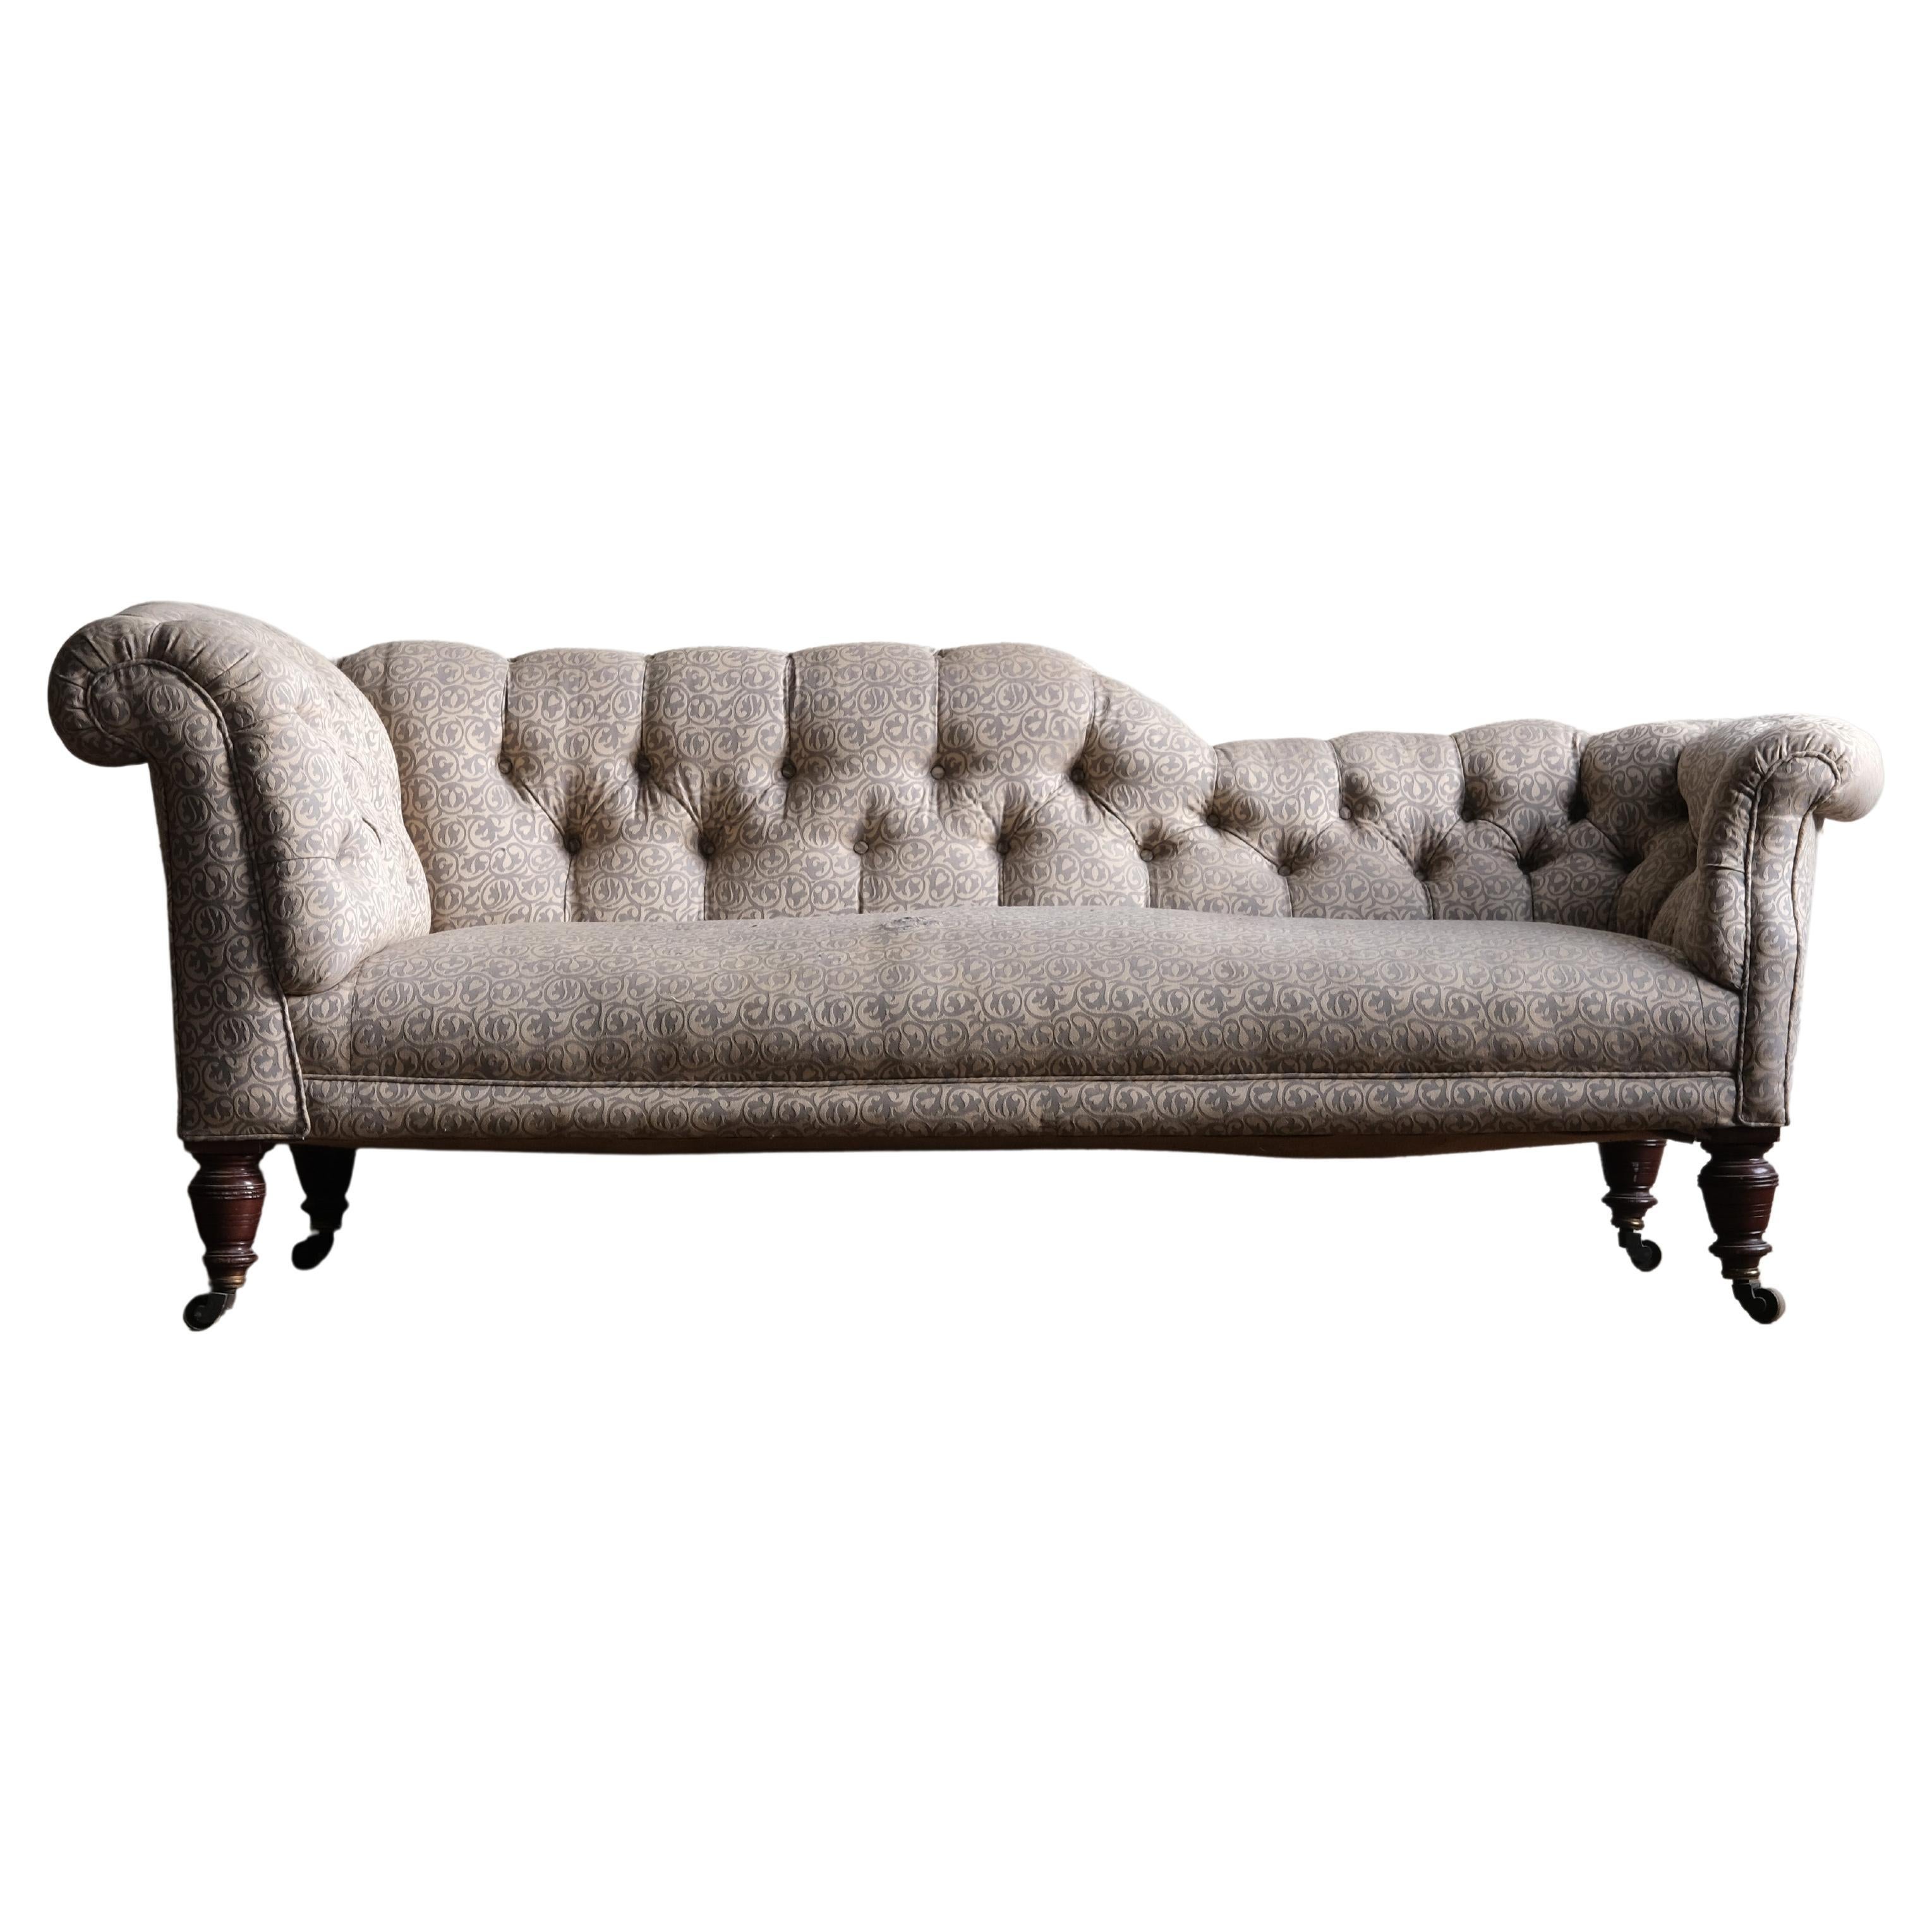 19th Century Chesterfield Sofa by Hampton & Sons London